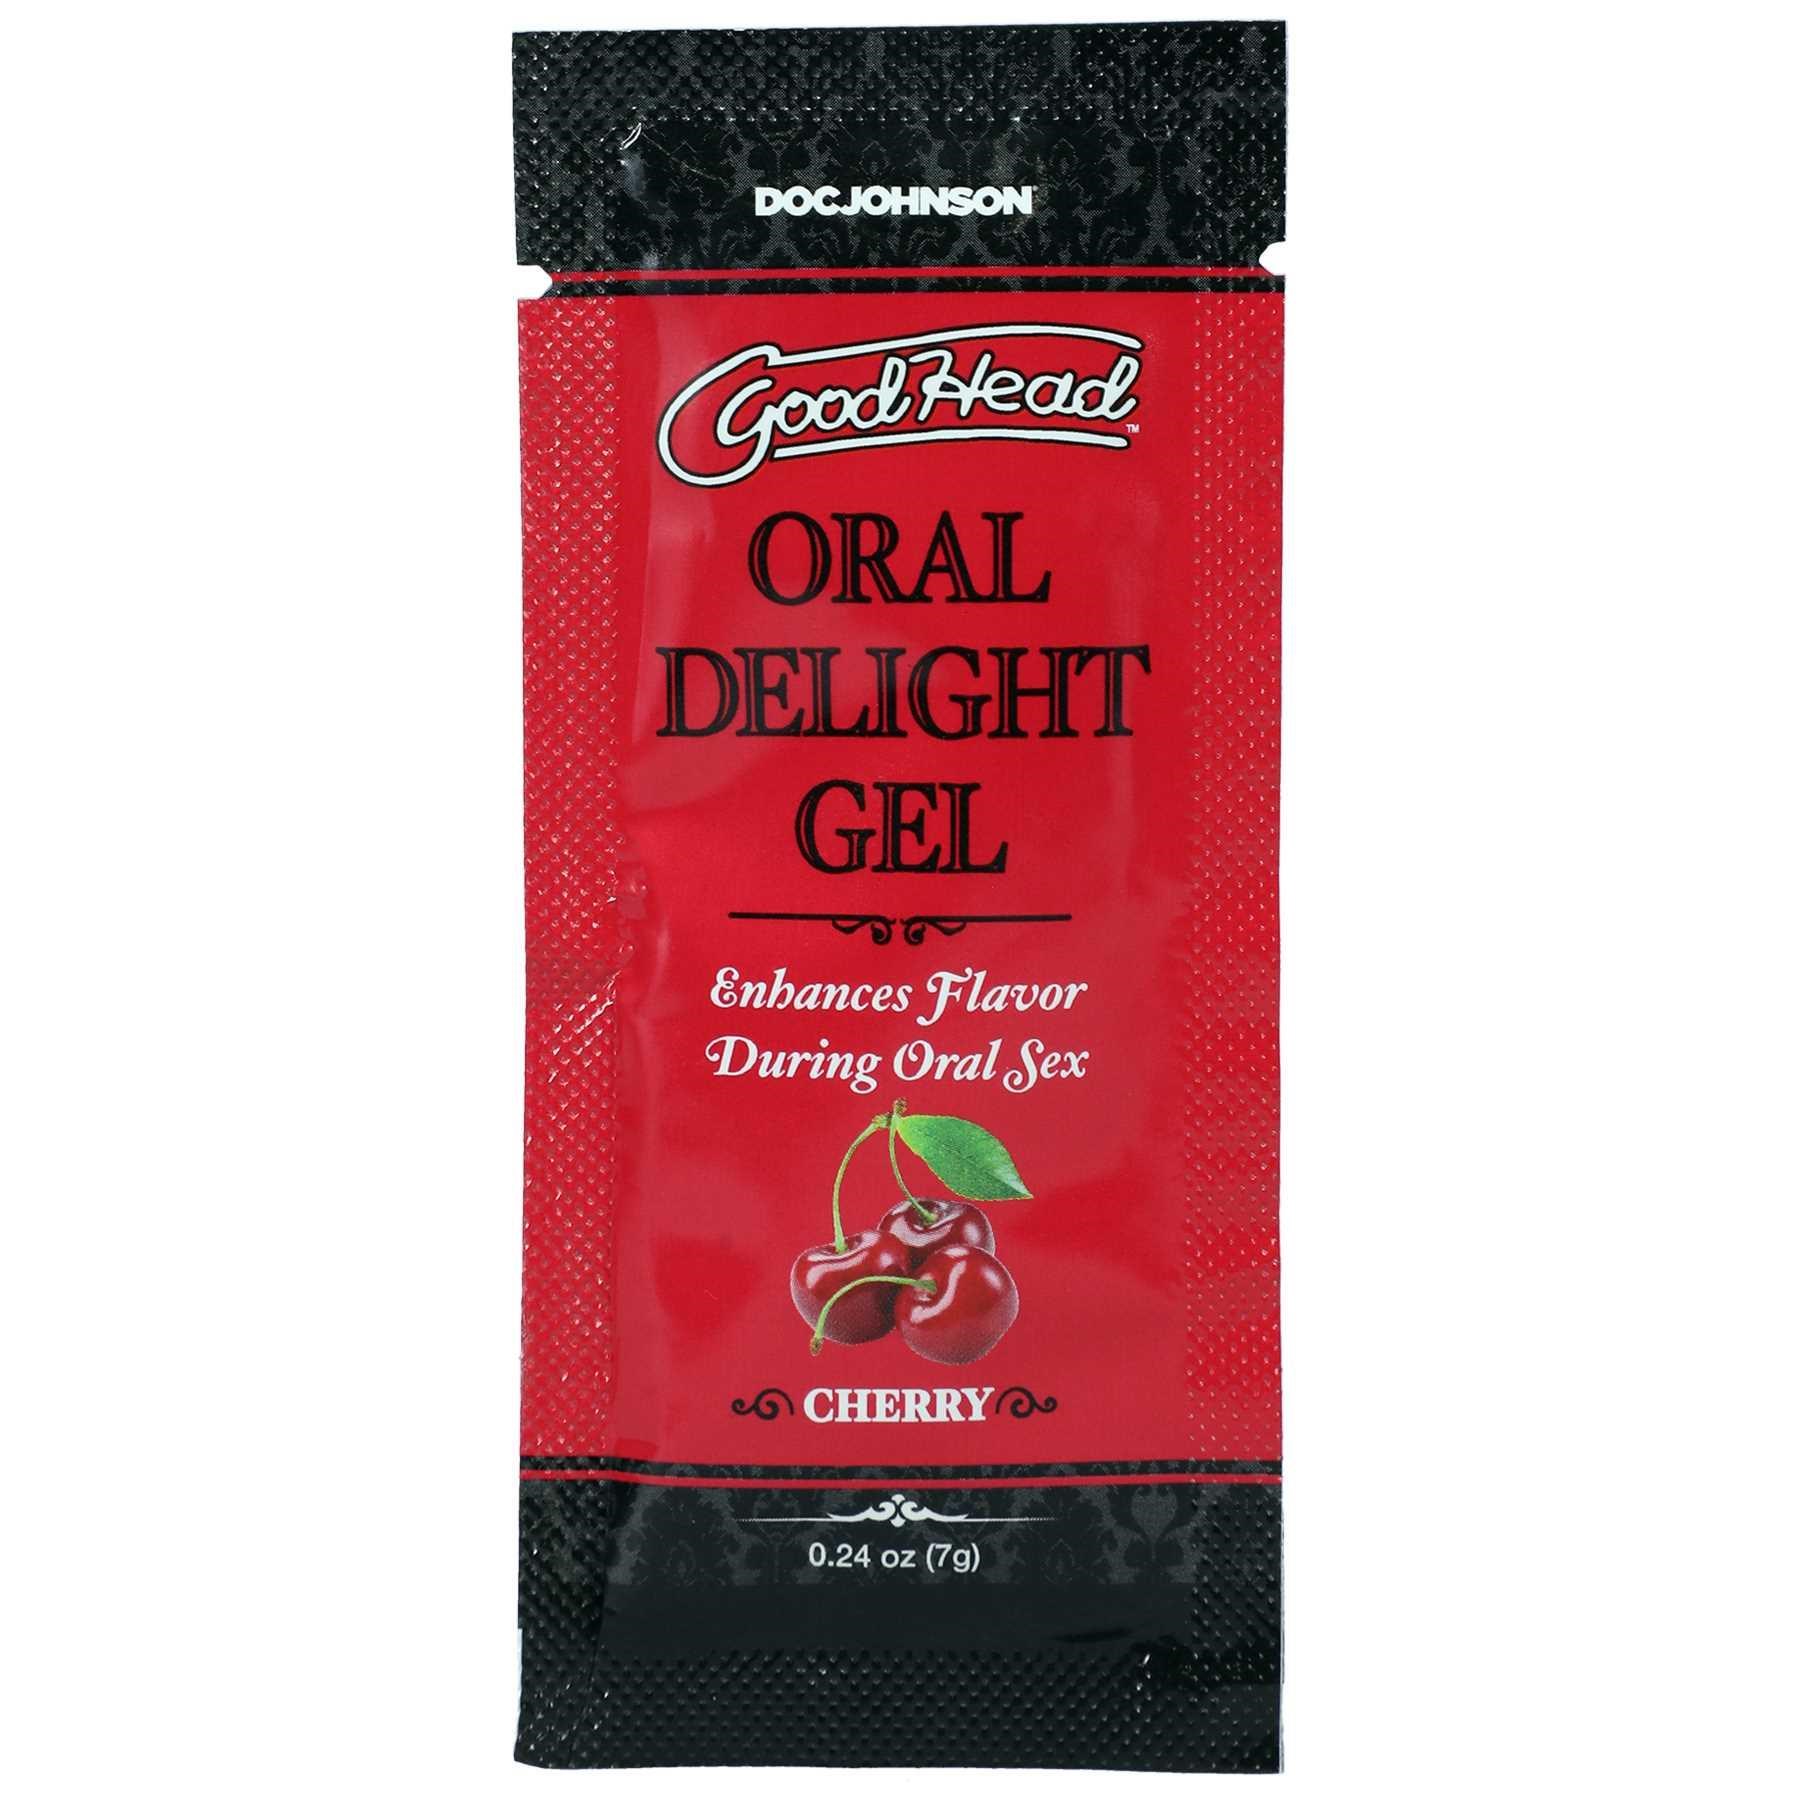 GoodHead - Oral Delight Gel - cherry -0.24 oz front